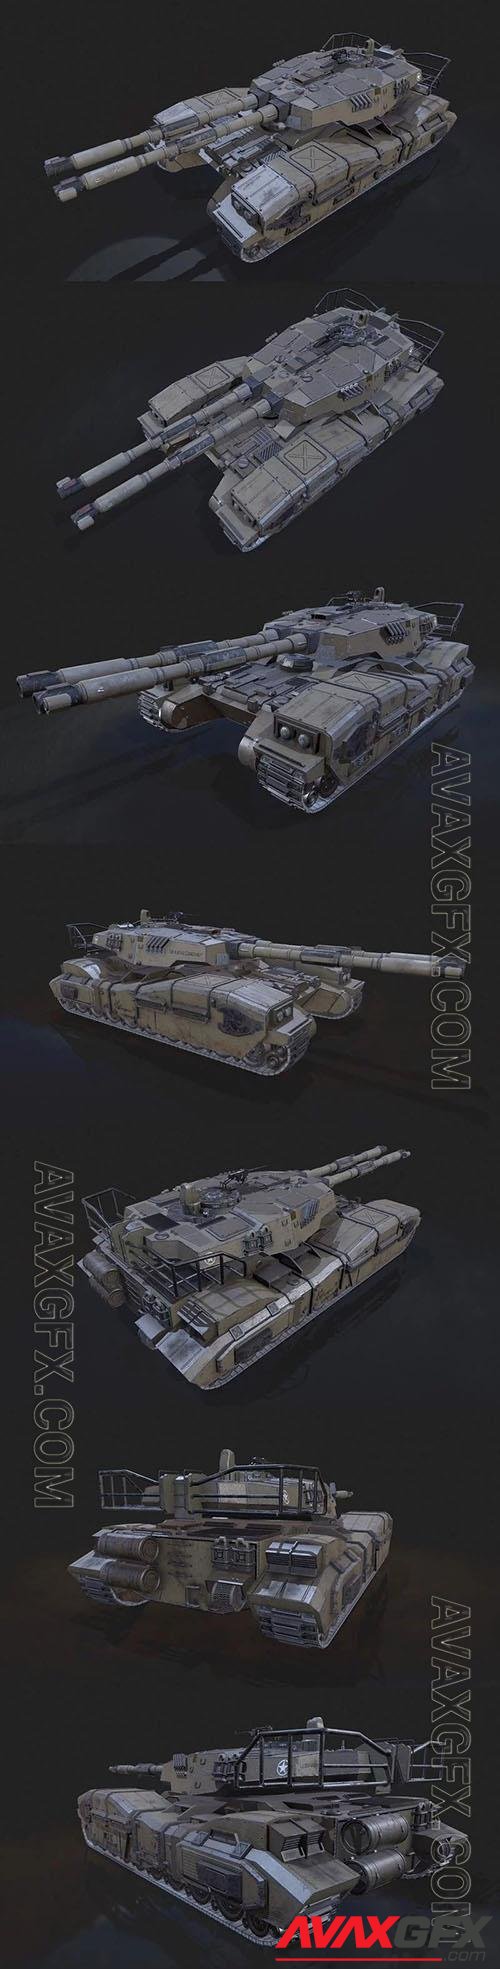 Type 61 tank 3d model